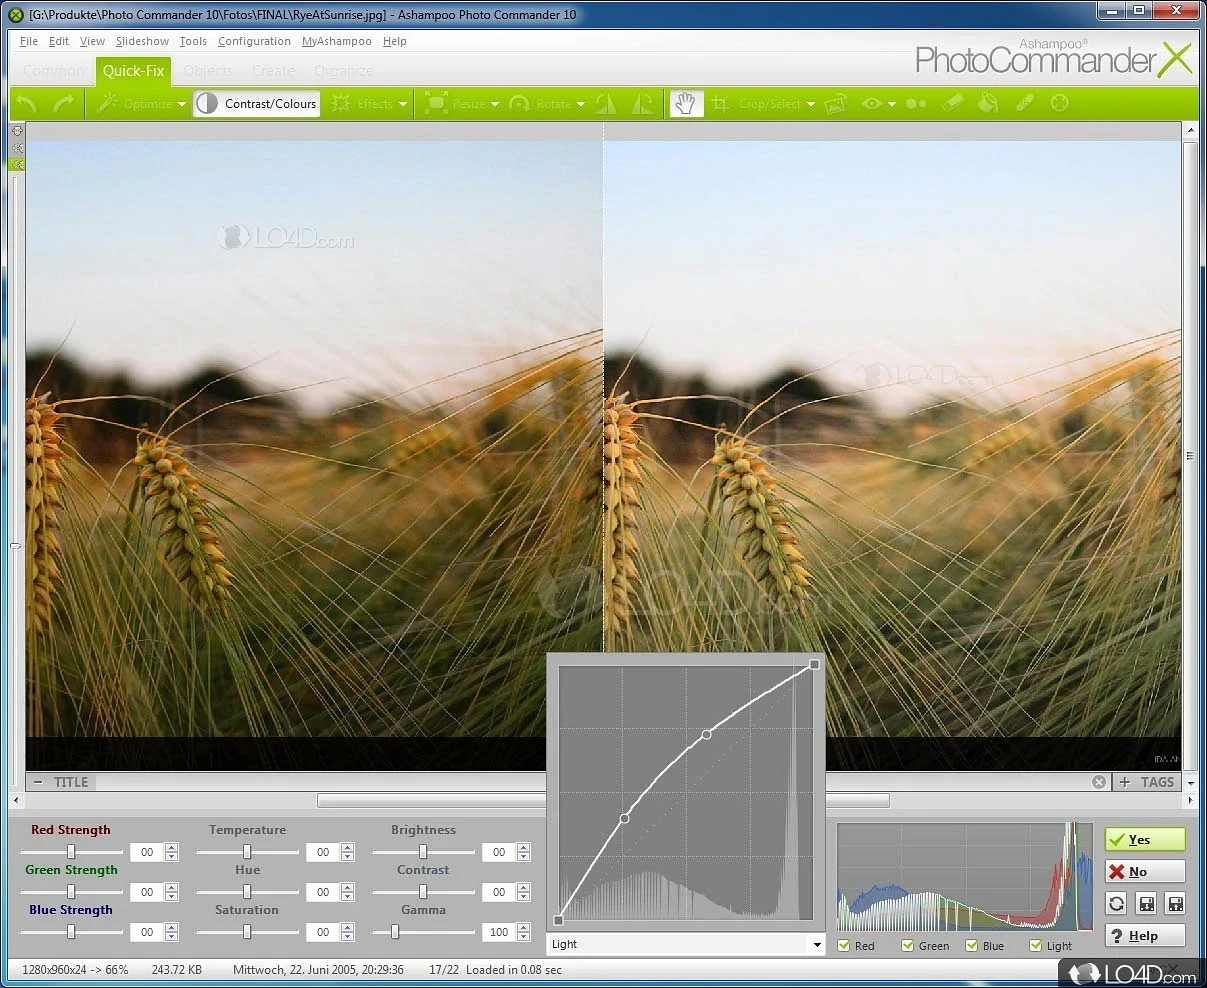 Some drawing options and creating slideshows - Screenshot of Ashampoo Photo Commander